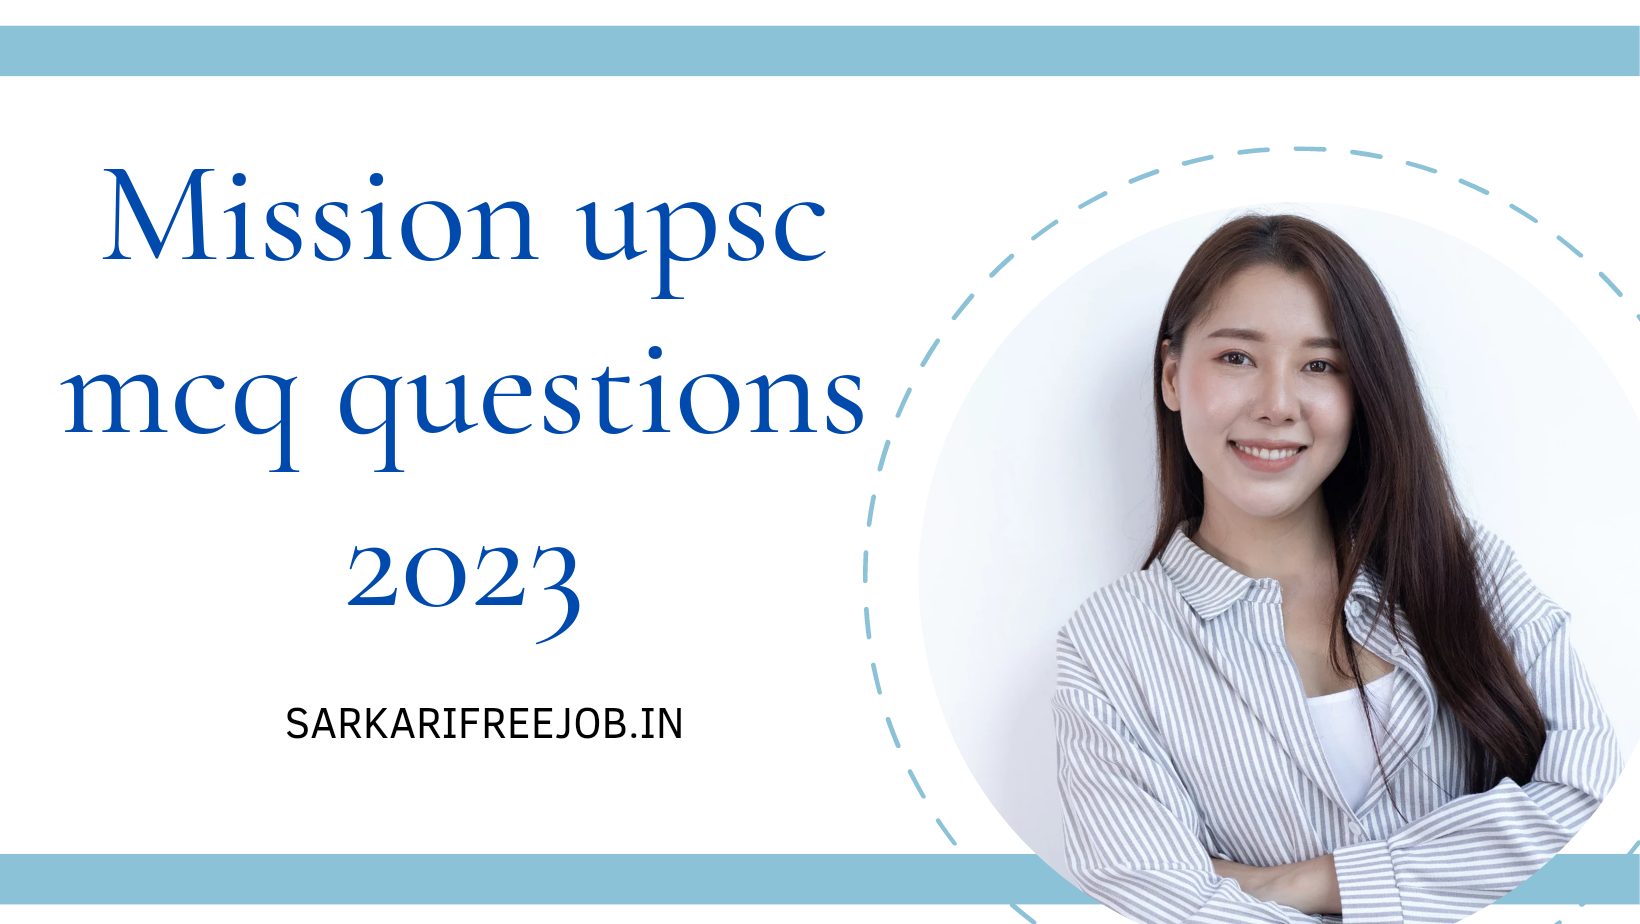 Mission upsc mcq questions 2023